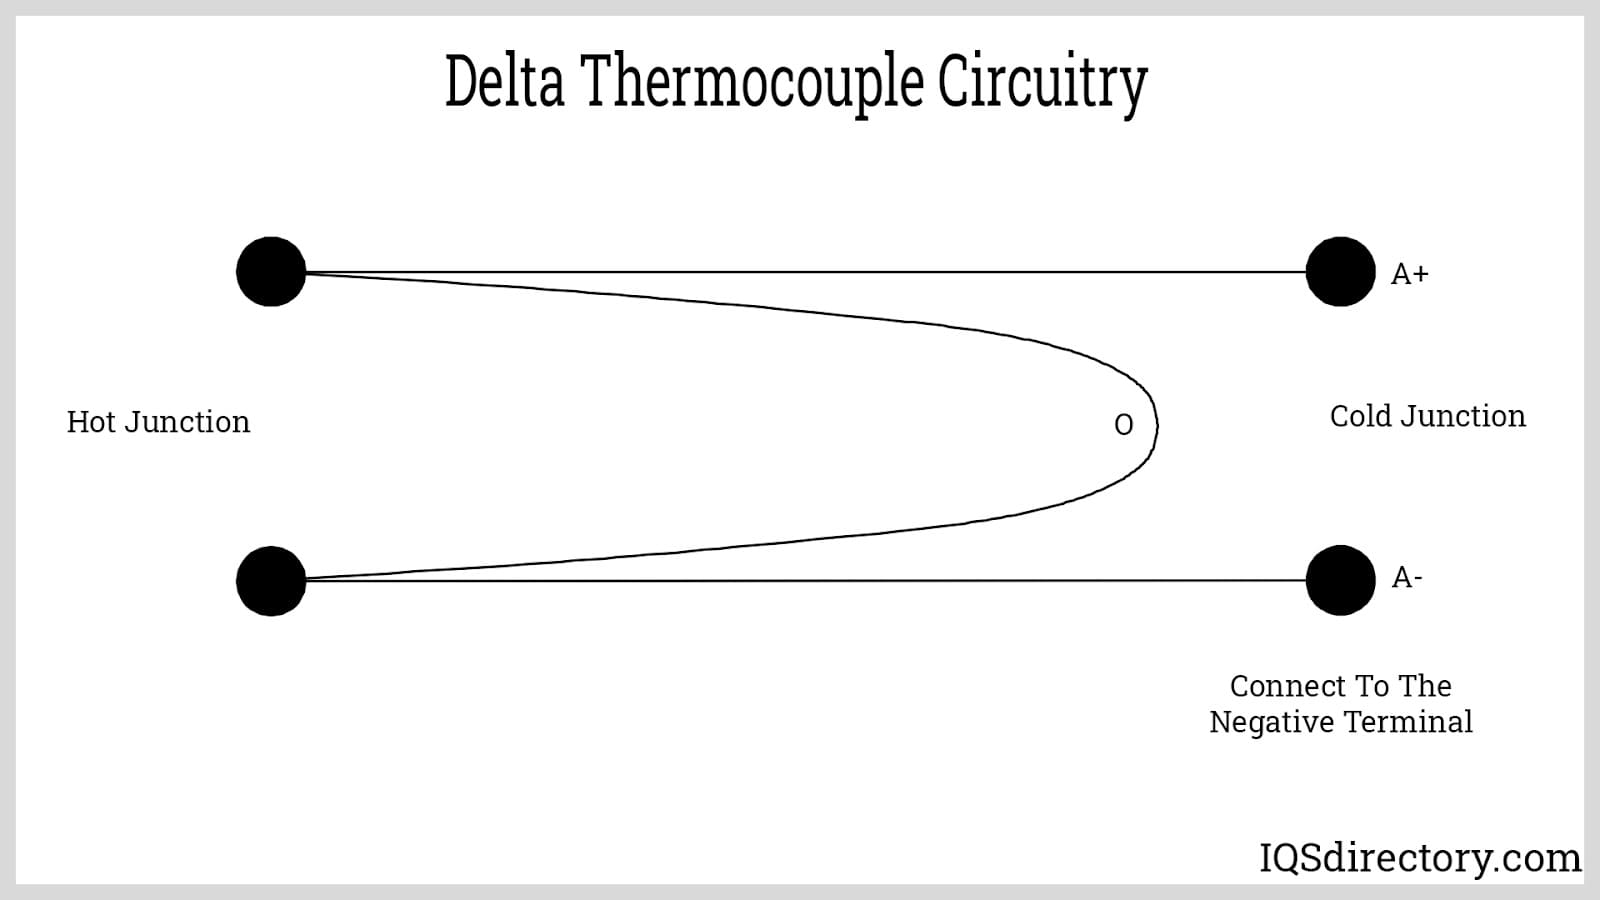 Delta Thermocouple Circuitry